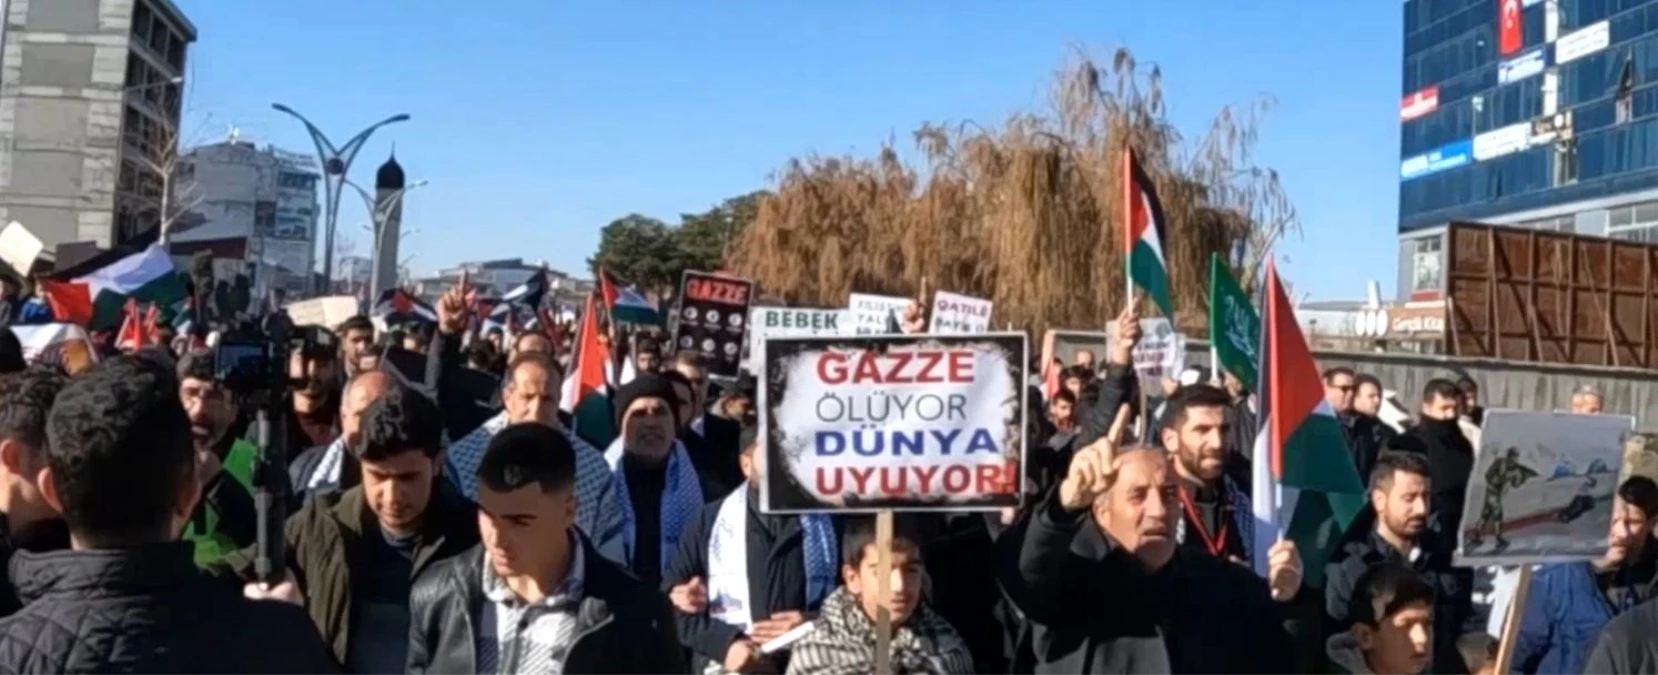 Van'da Filistin'e Özgürlük İsrail'e Lanet Yürüyüşü Düzenlendi